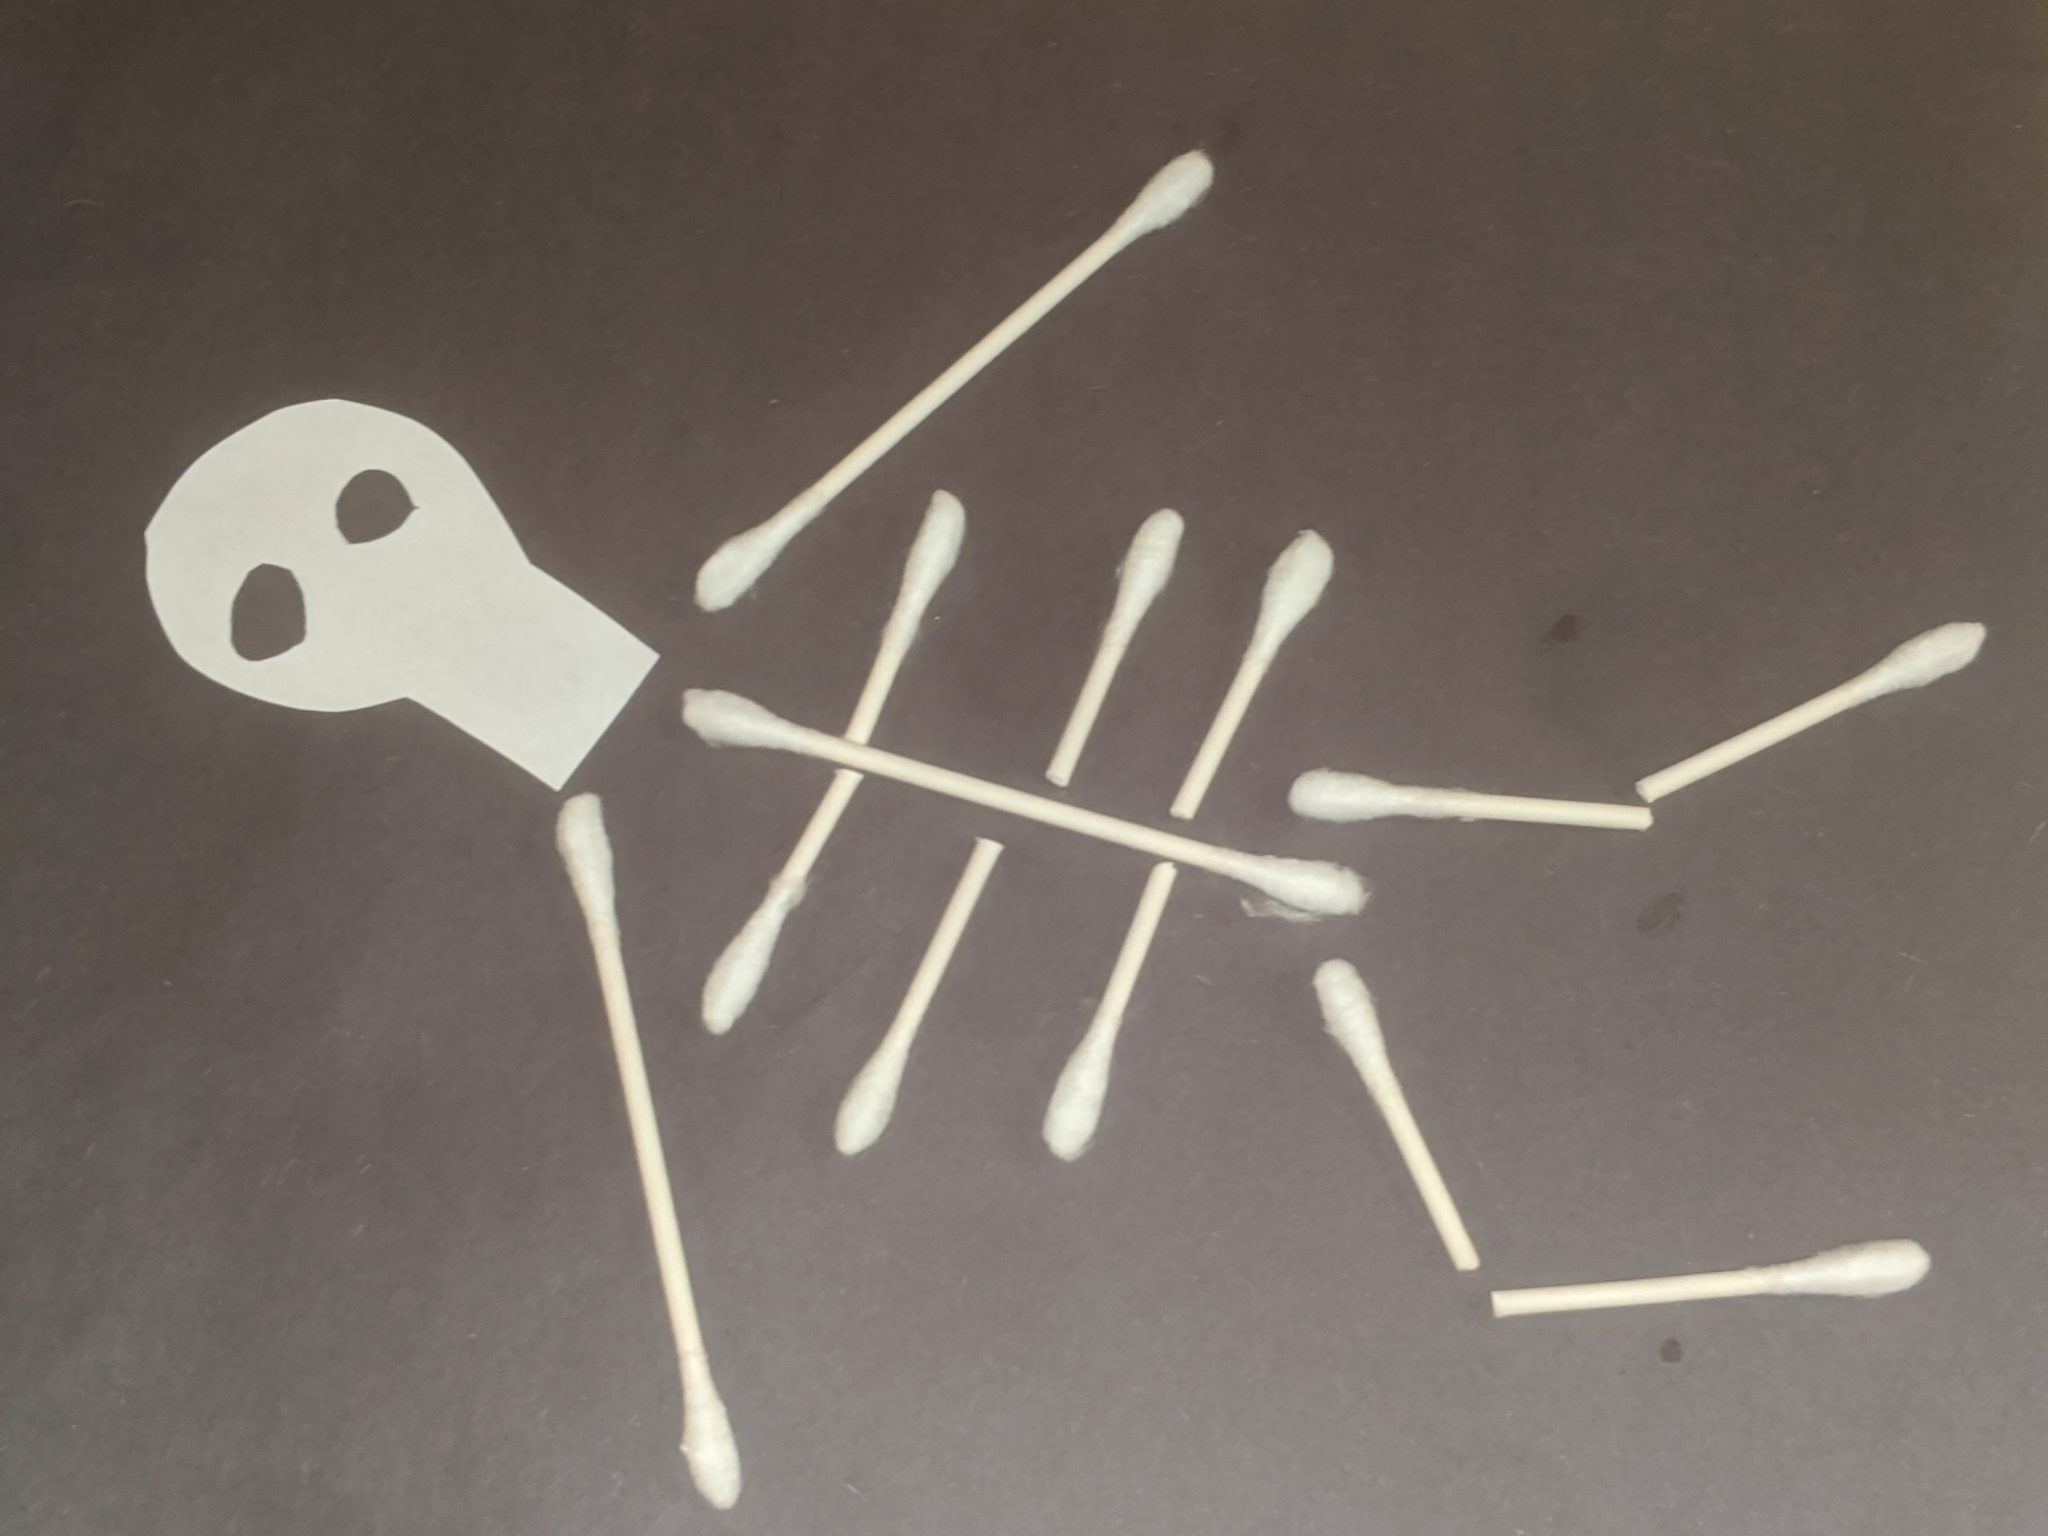 STEAM Learning Lab – Q-tip Skeleton